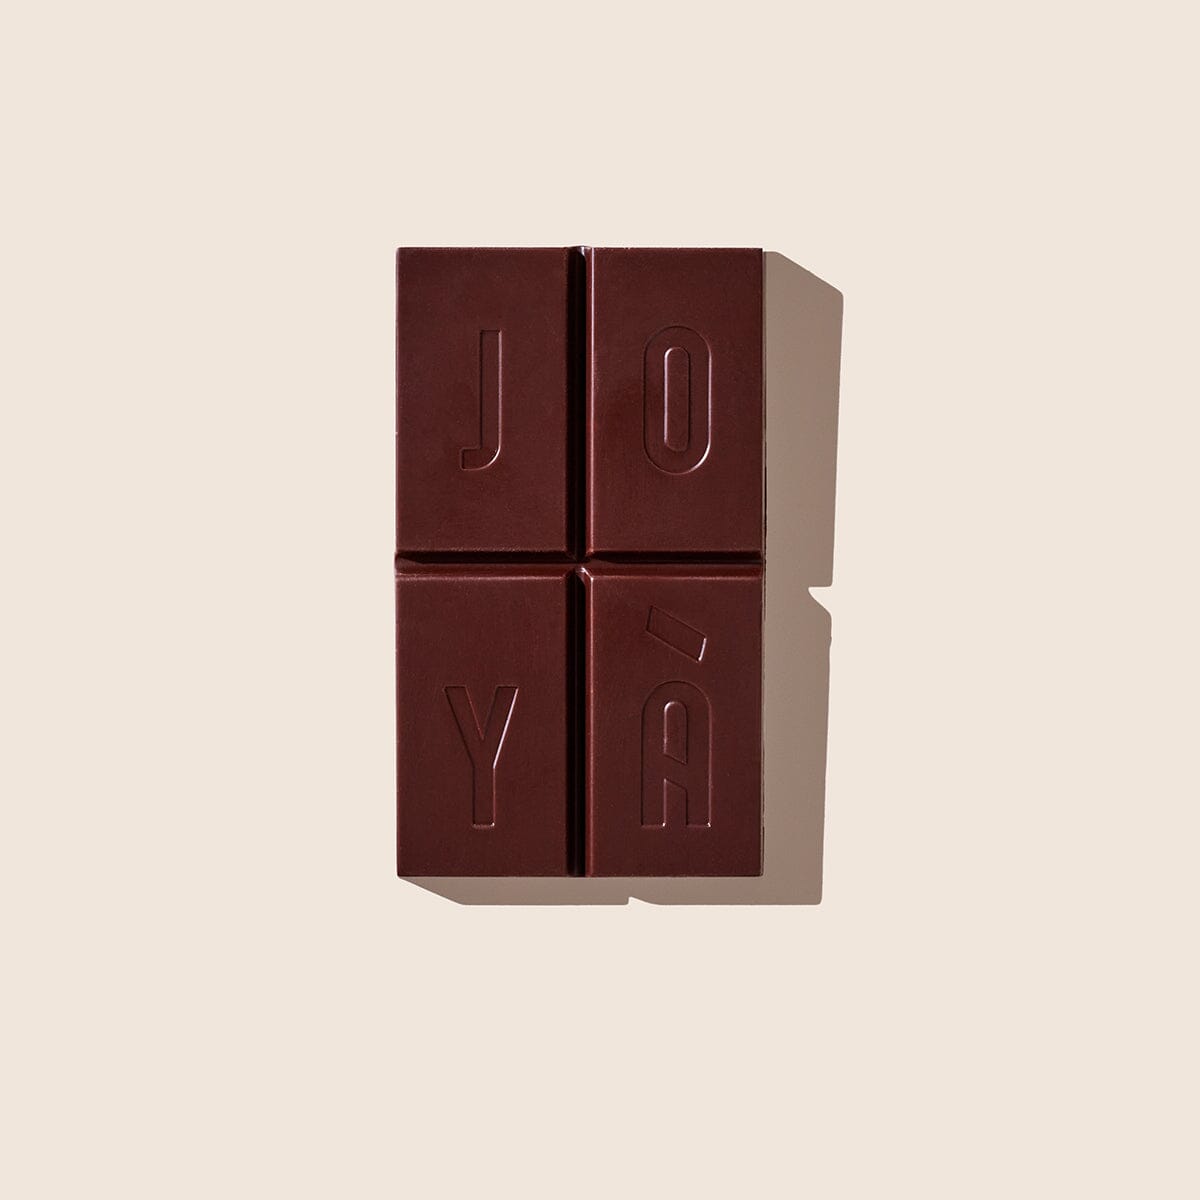 Unwrapped bar of JOYÀ Focus Functional Chocolate

          